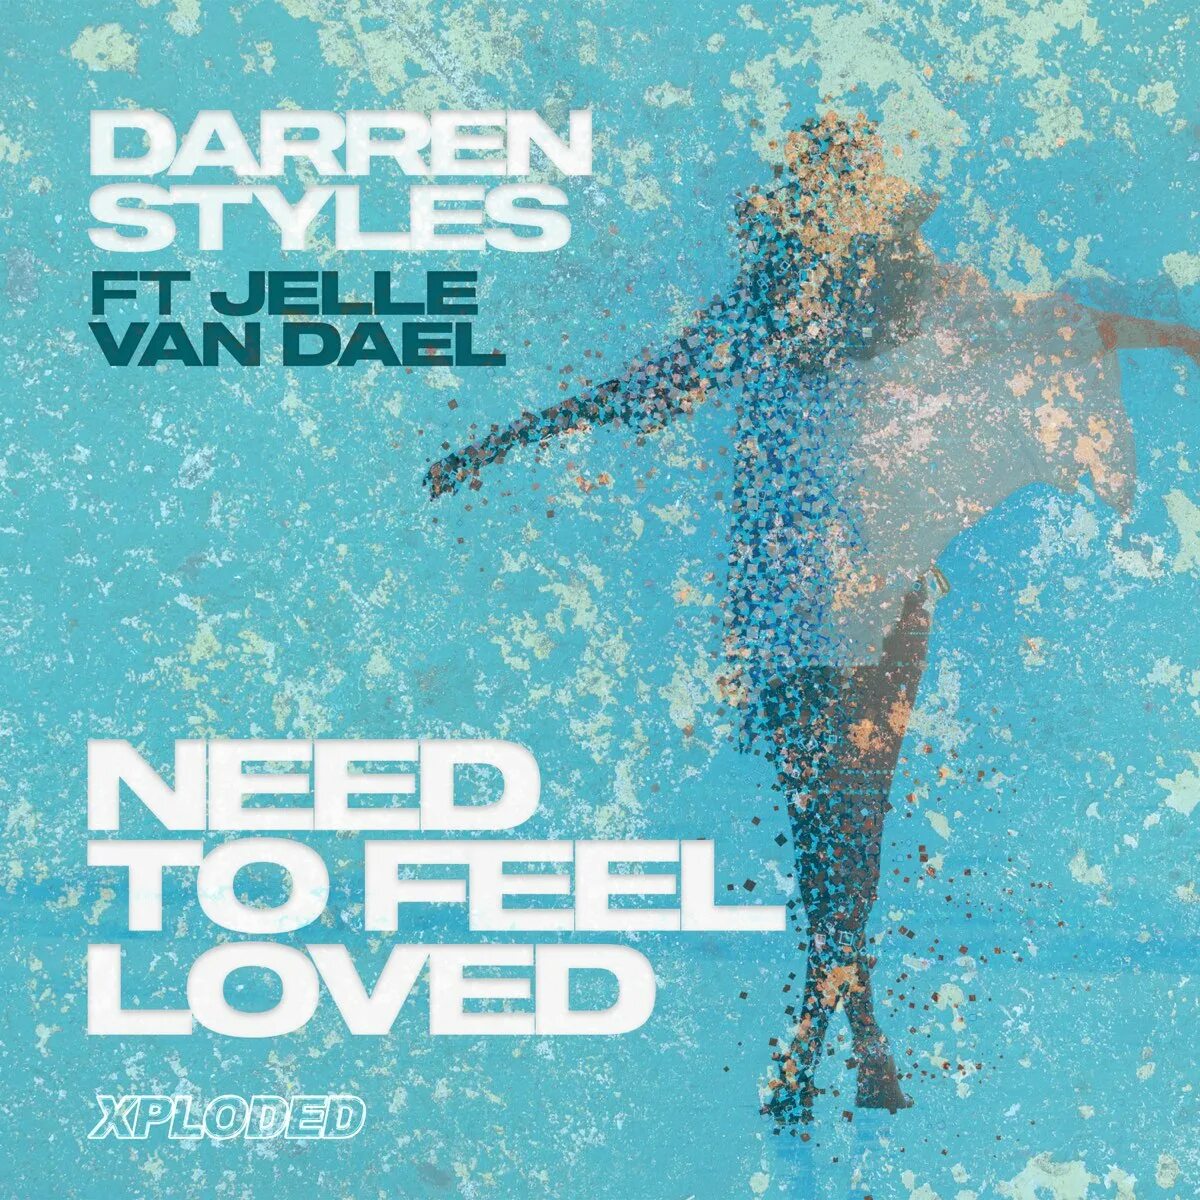 Need to feel Loved. Darren Styles,Jelle van Dael - need to feel Loved. Album Art need to feel Loved need to feel Loved Delline Bass. Reflekt need to feel loved